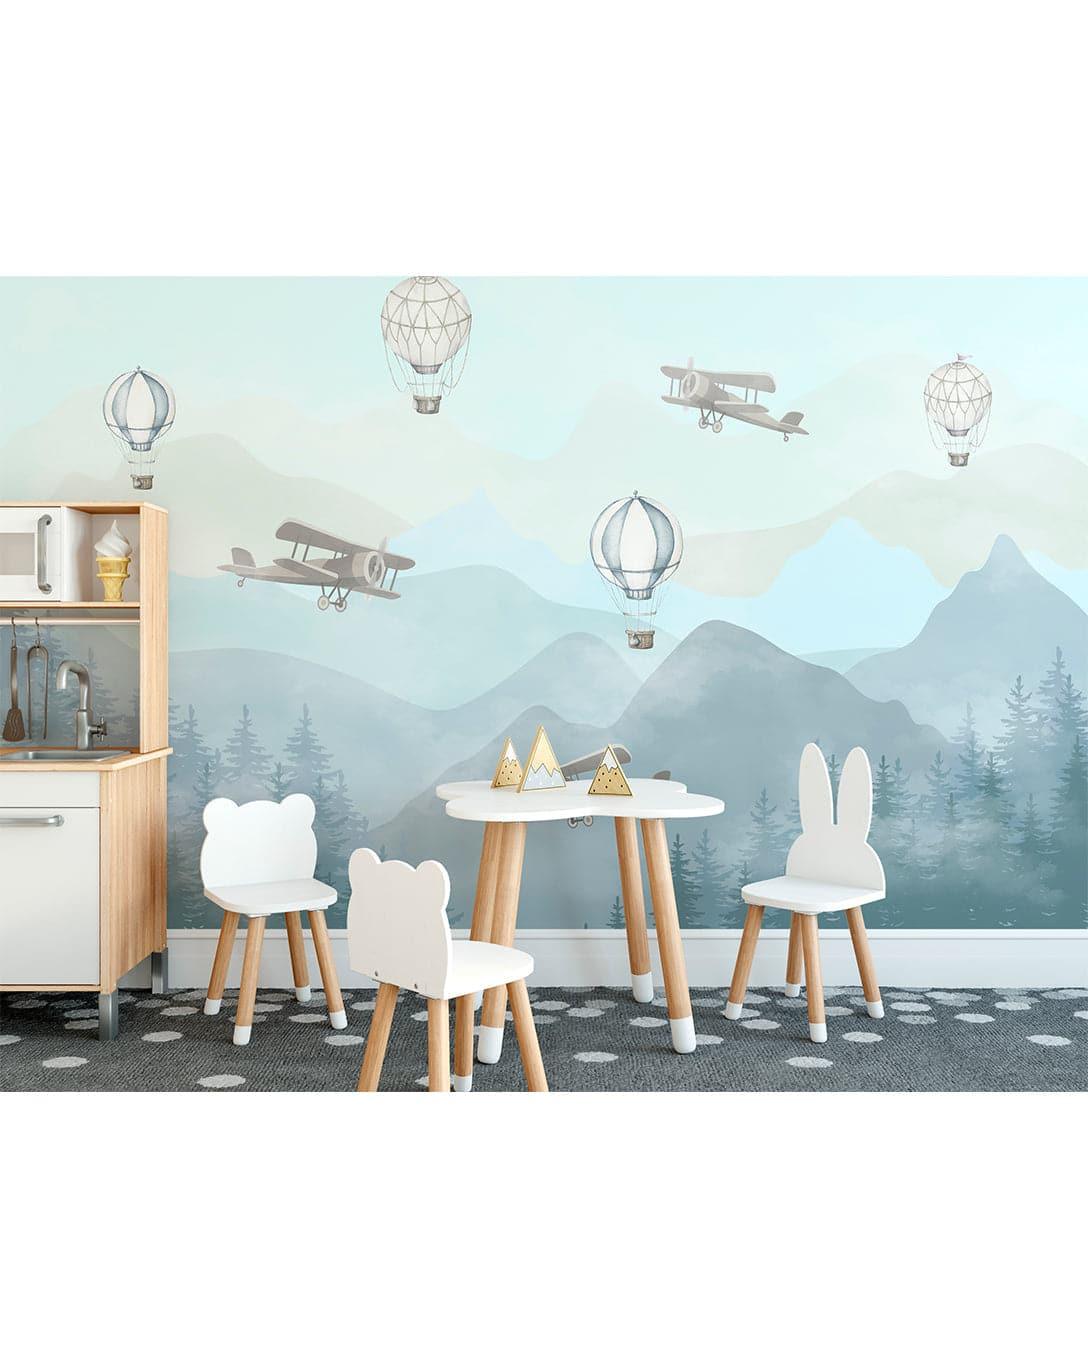 Hot Air Balloons Airplanes and Mountains Self Adhesive Wall Mural 